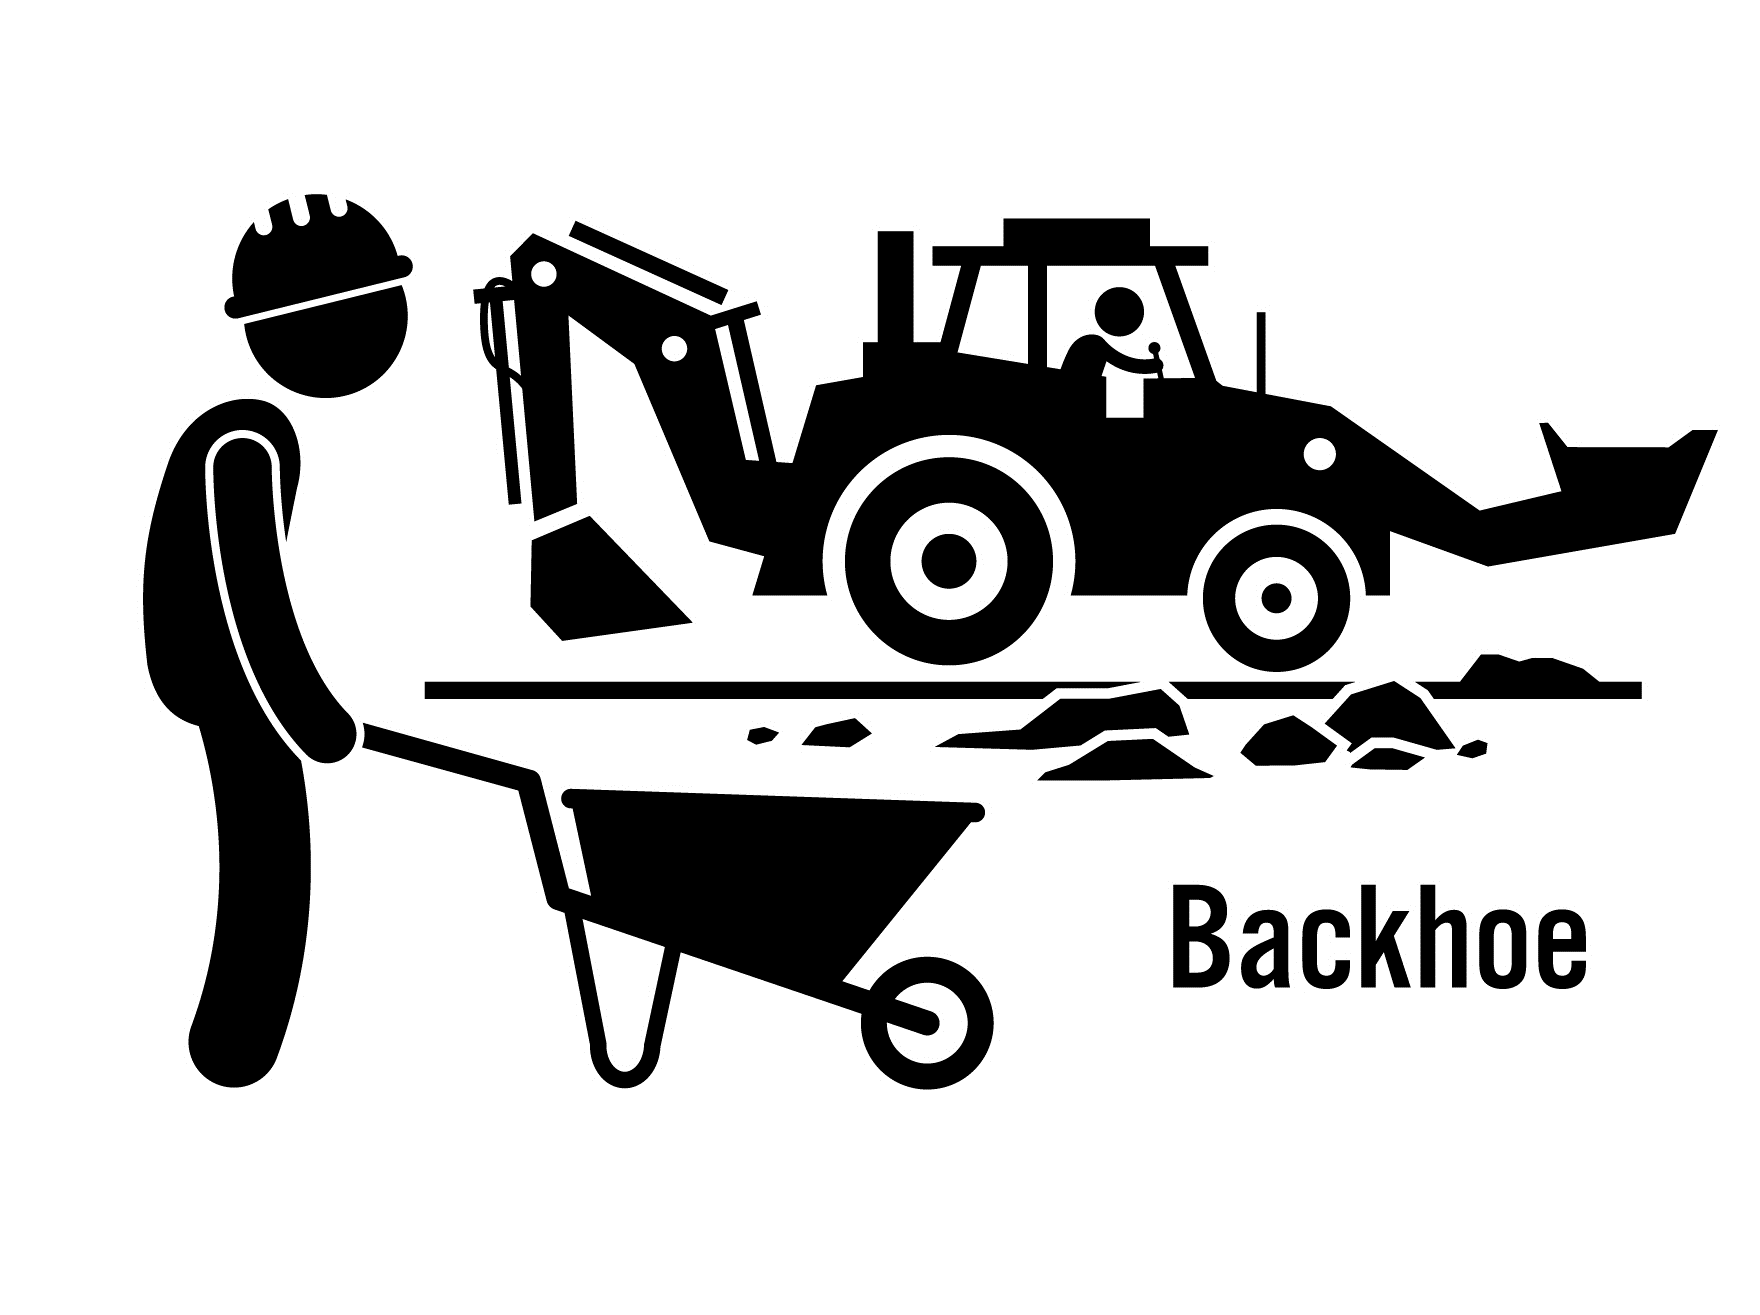 Backhoe equipment loans and financing.png